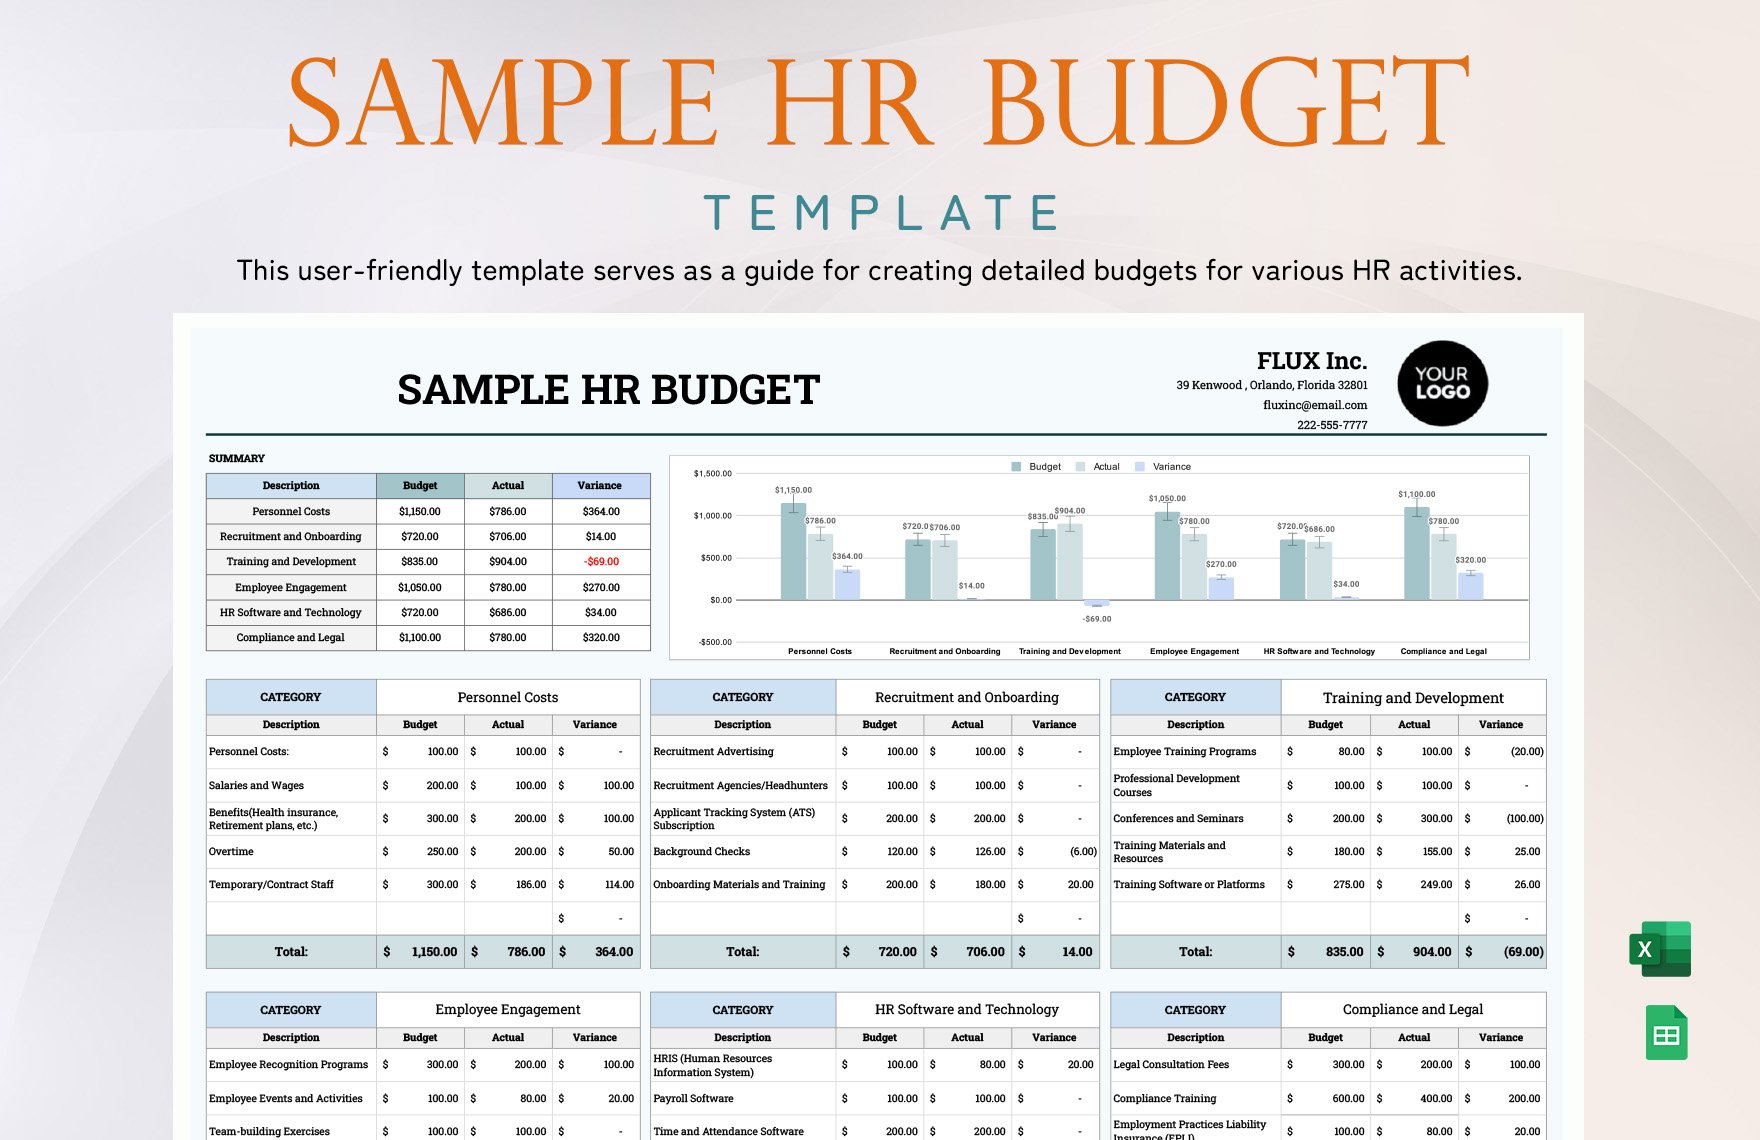 Sample HR Budget Template